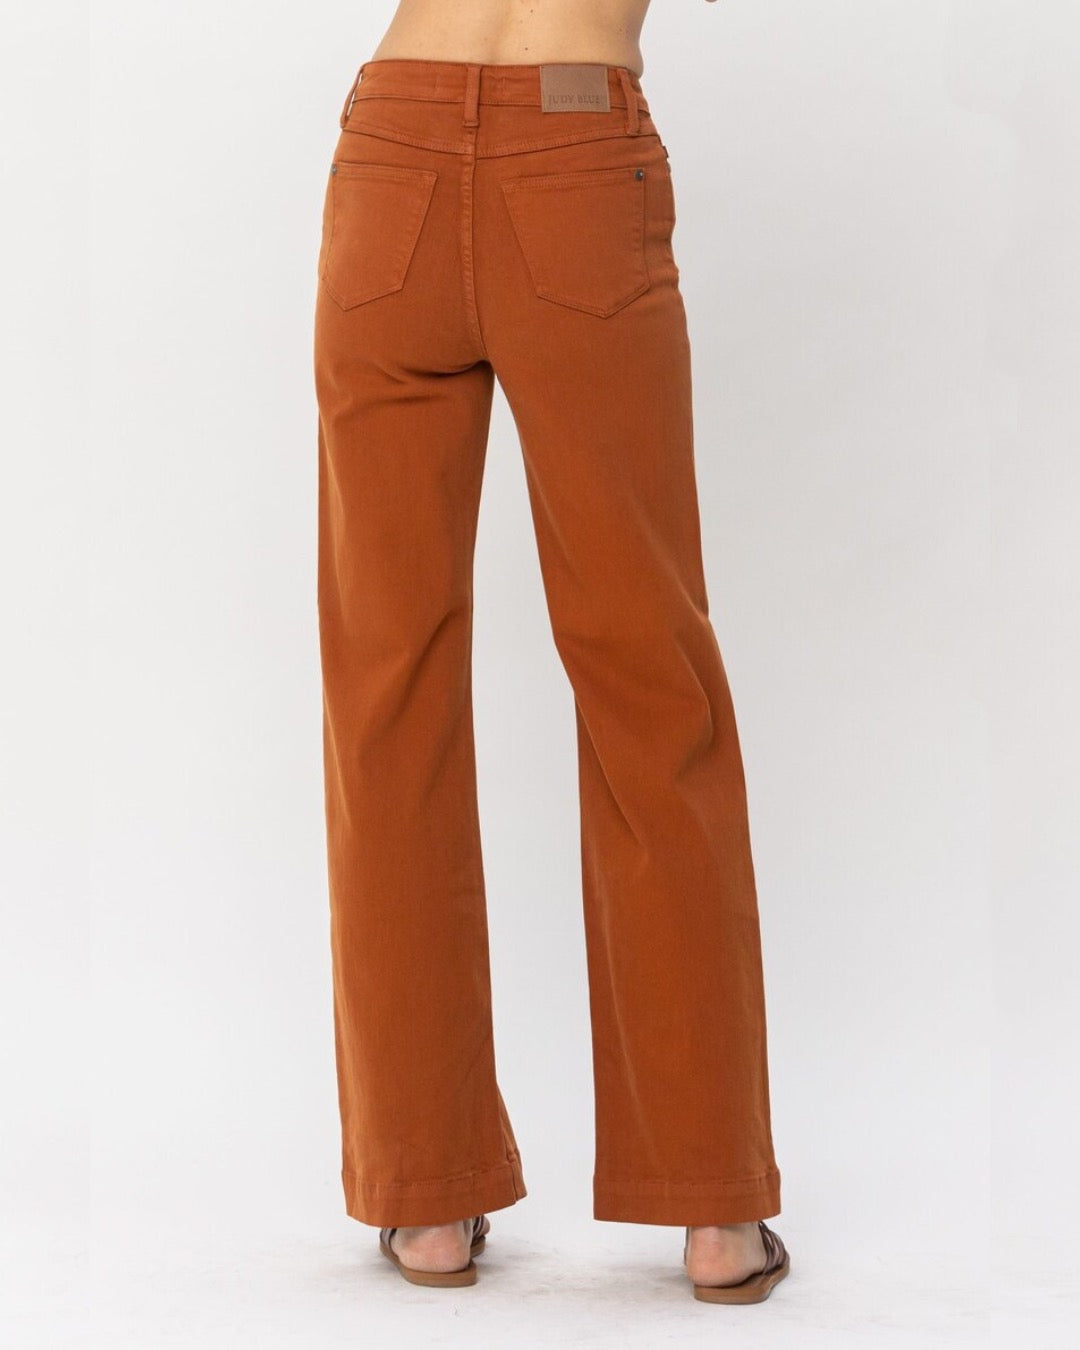 Judy Blue High Waist Auburn Orange Jeans